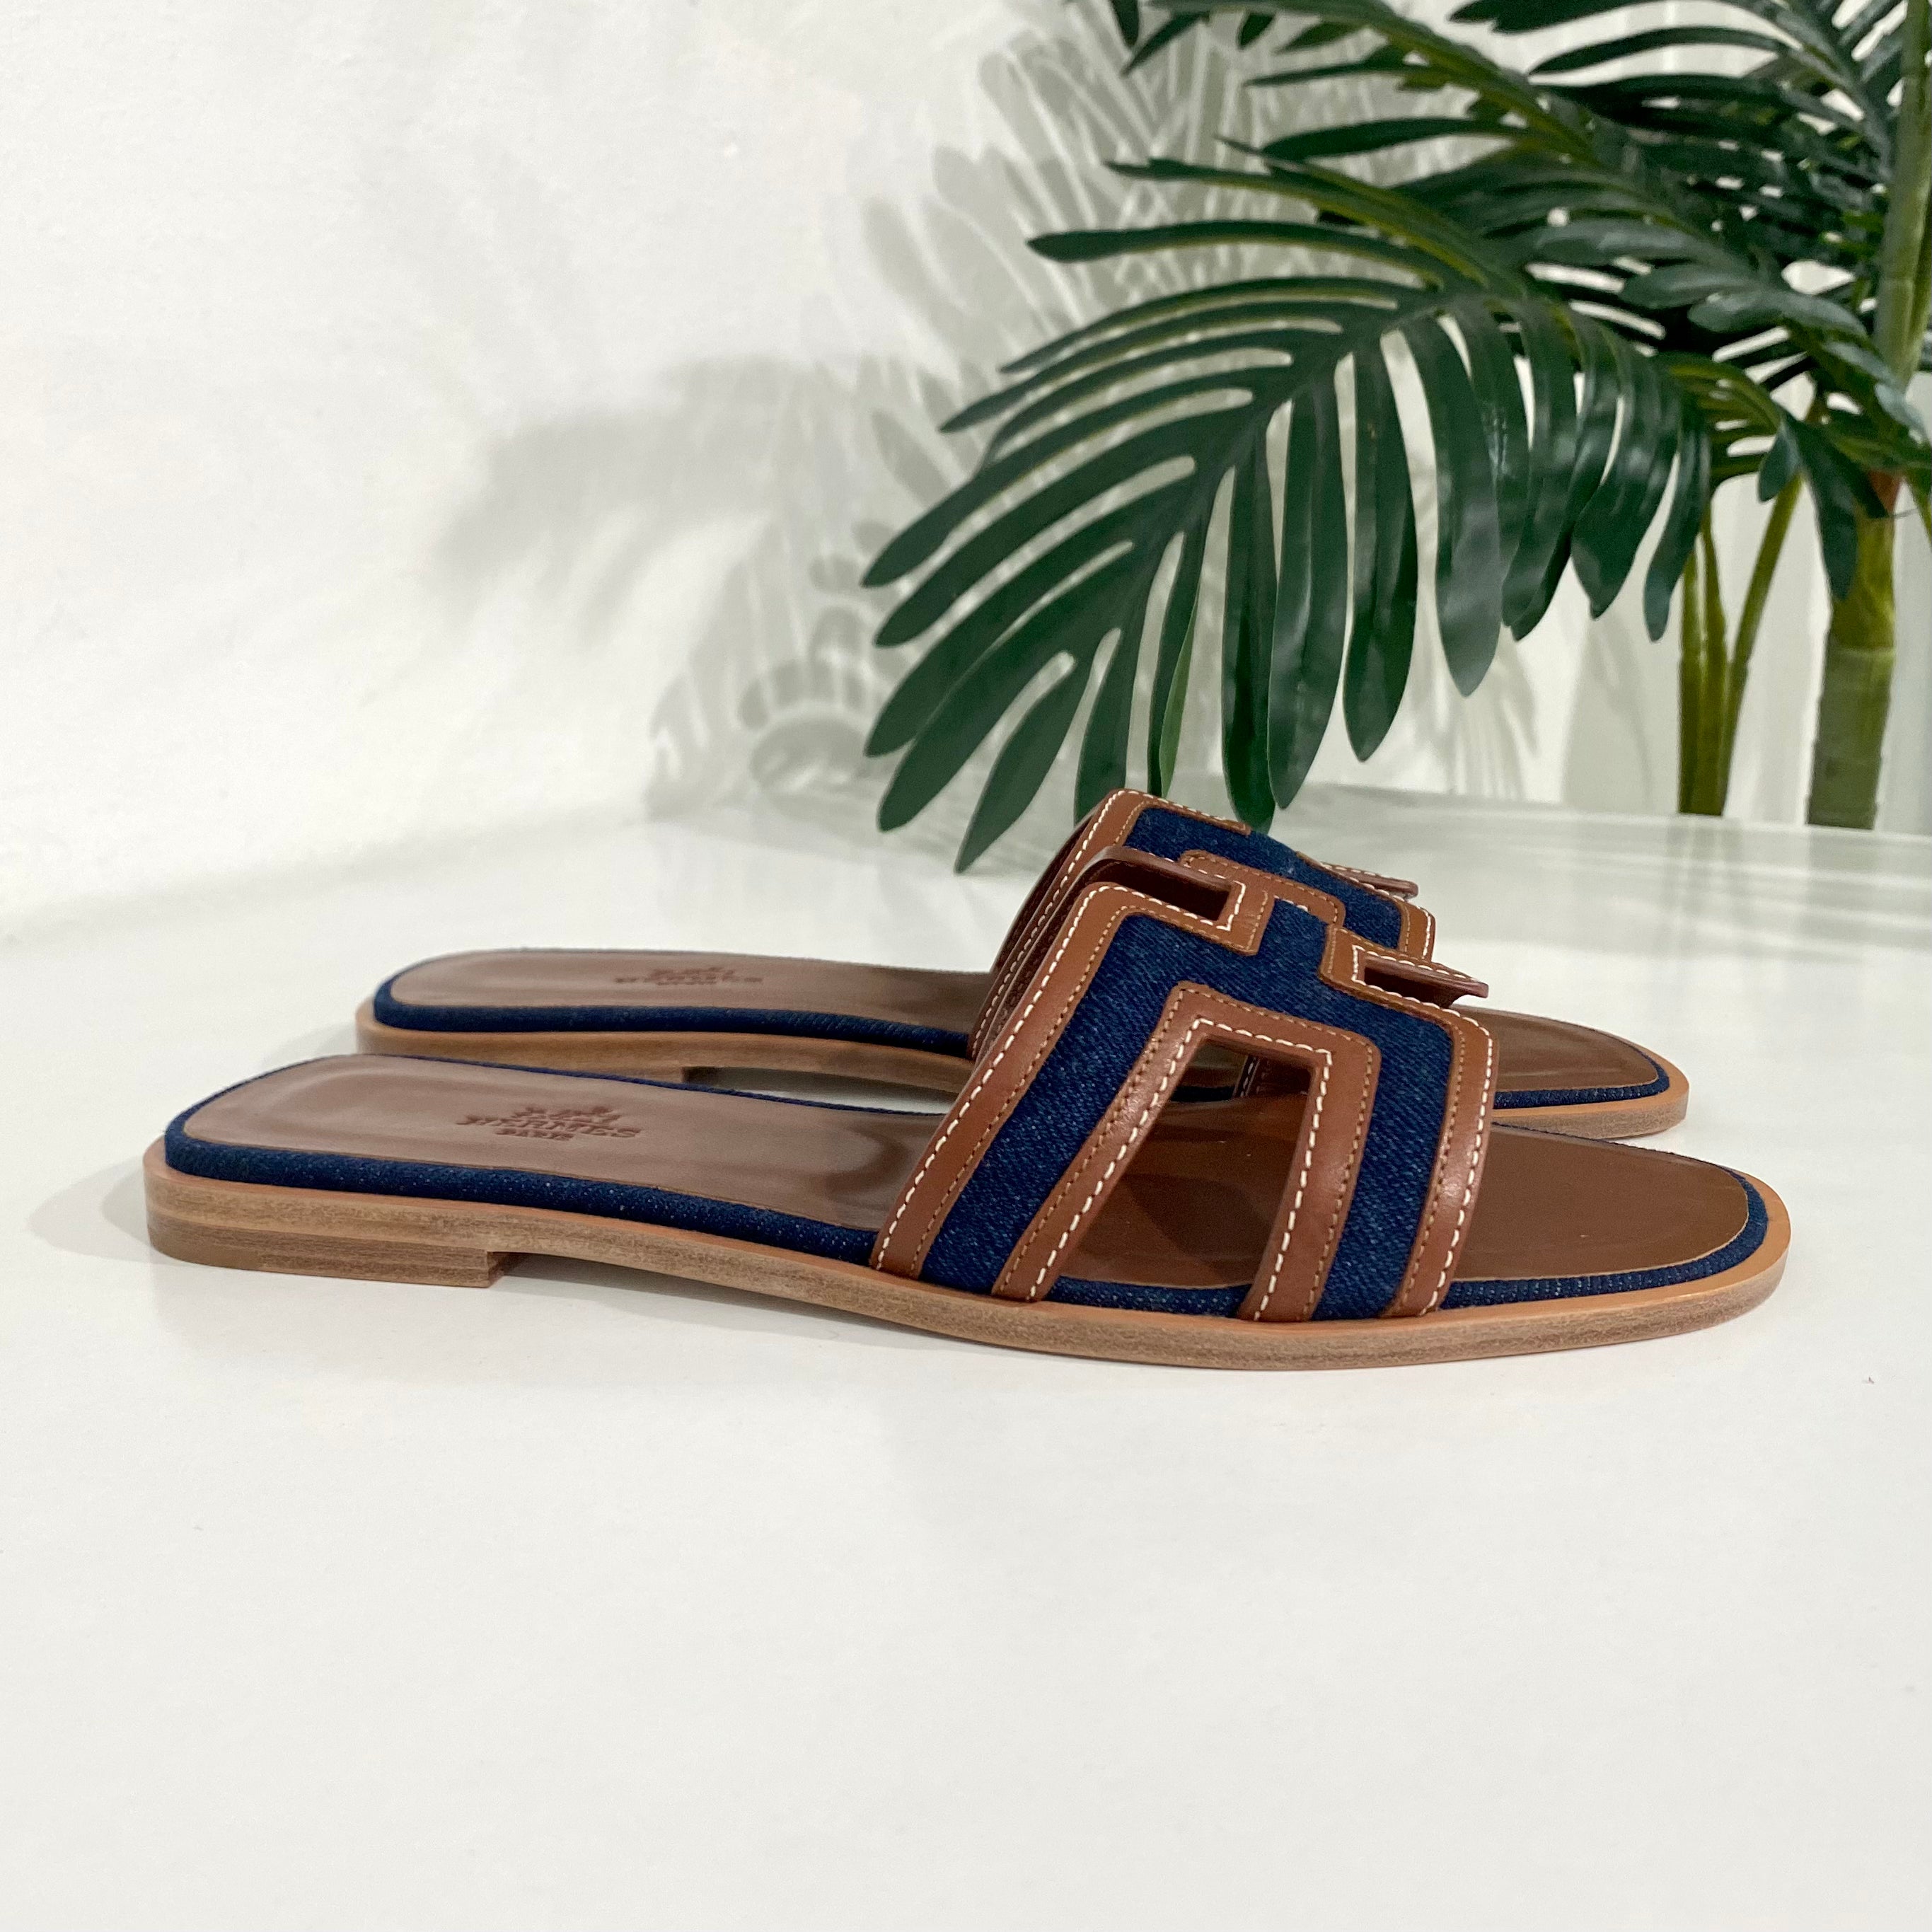 NEW Hermès Denim & Gold Oran Sandals